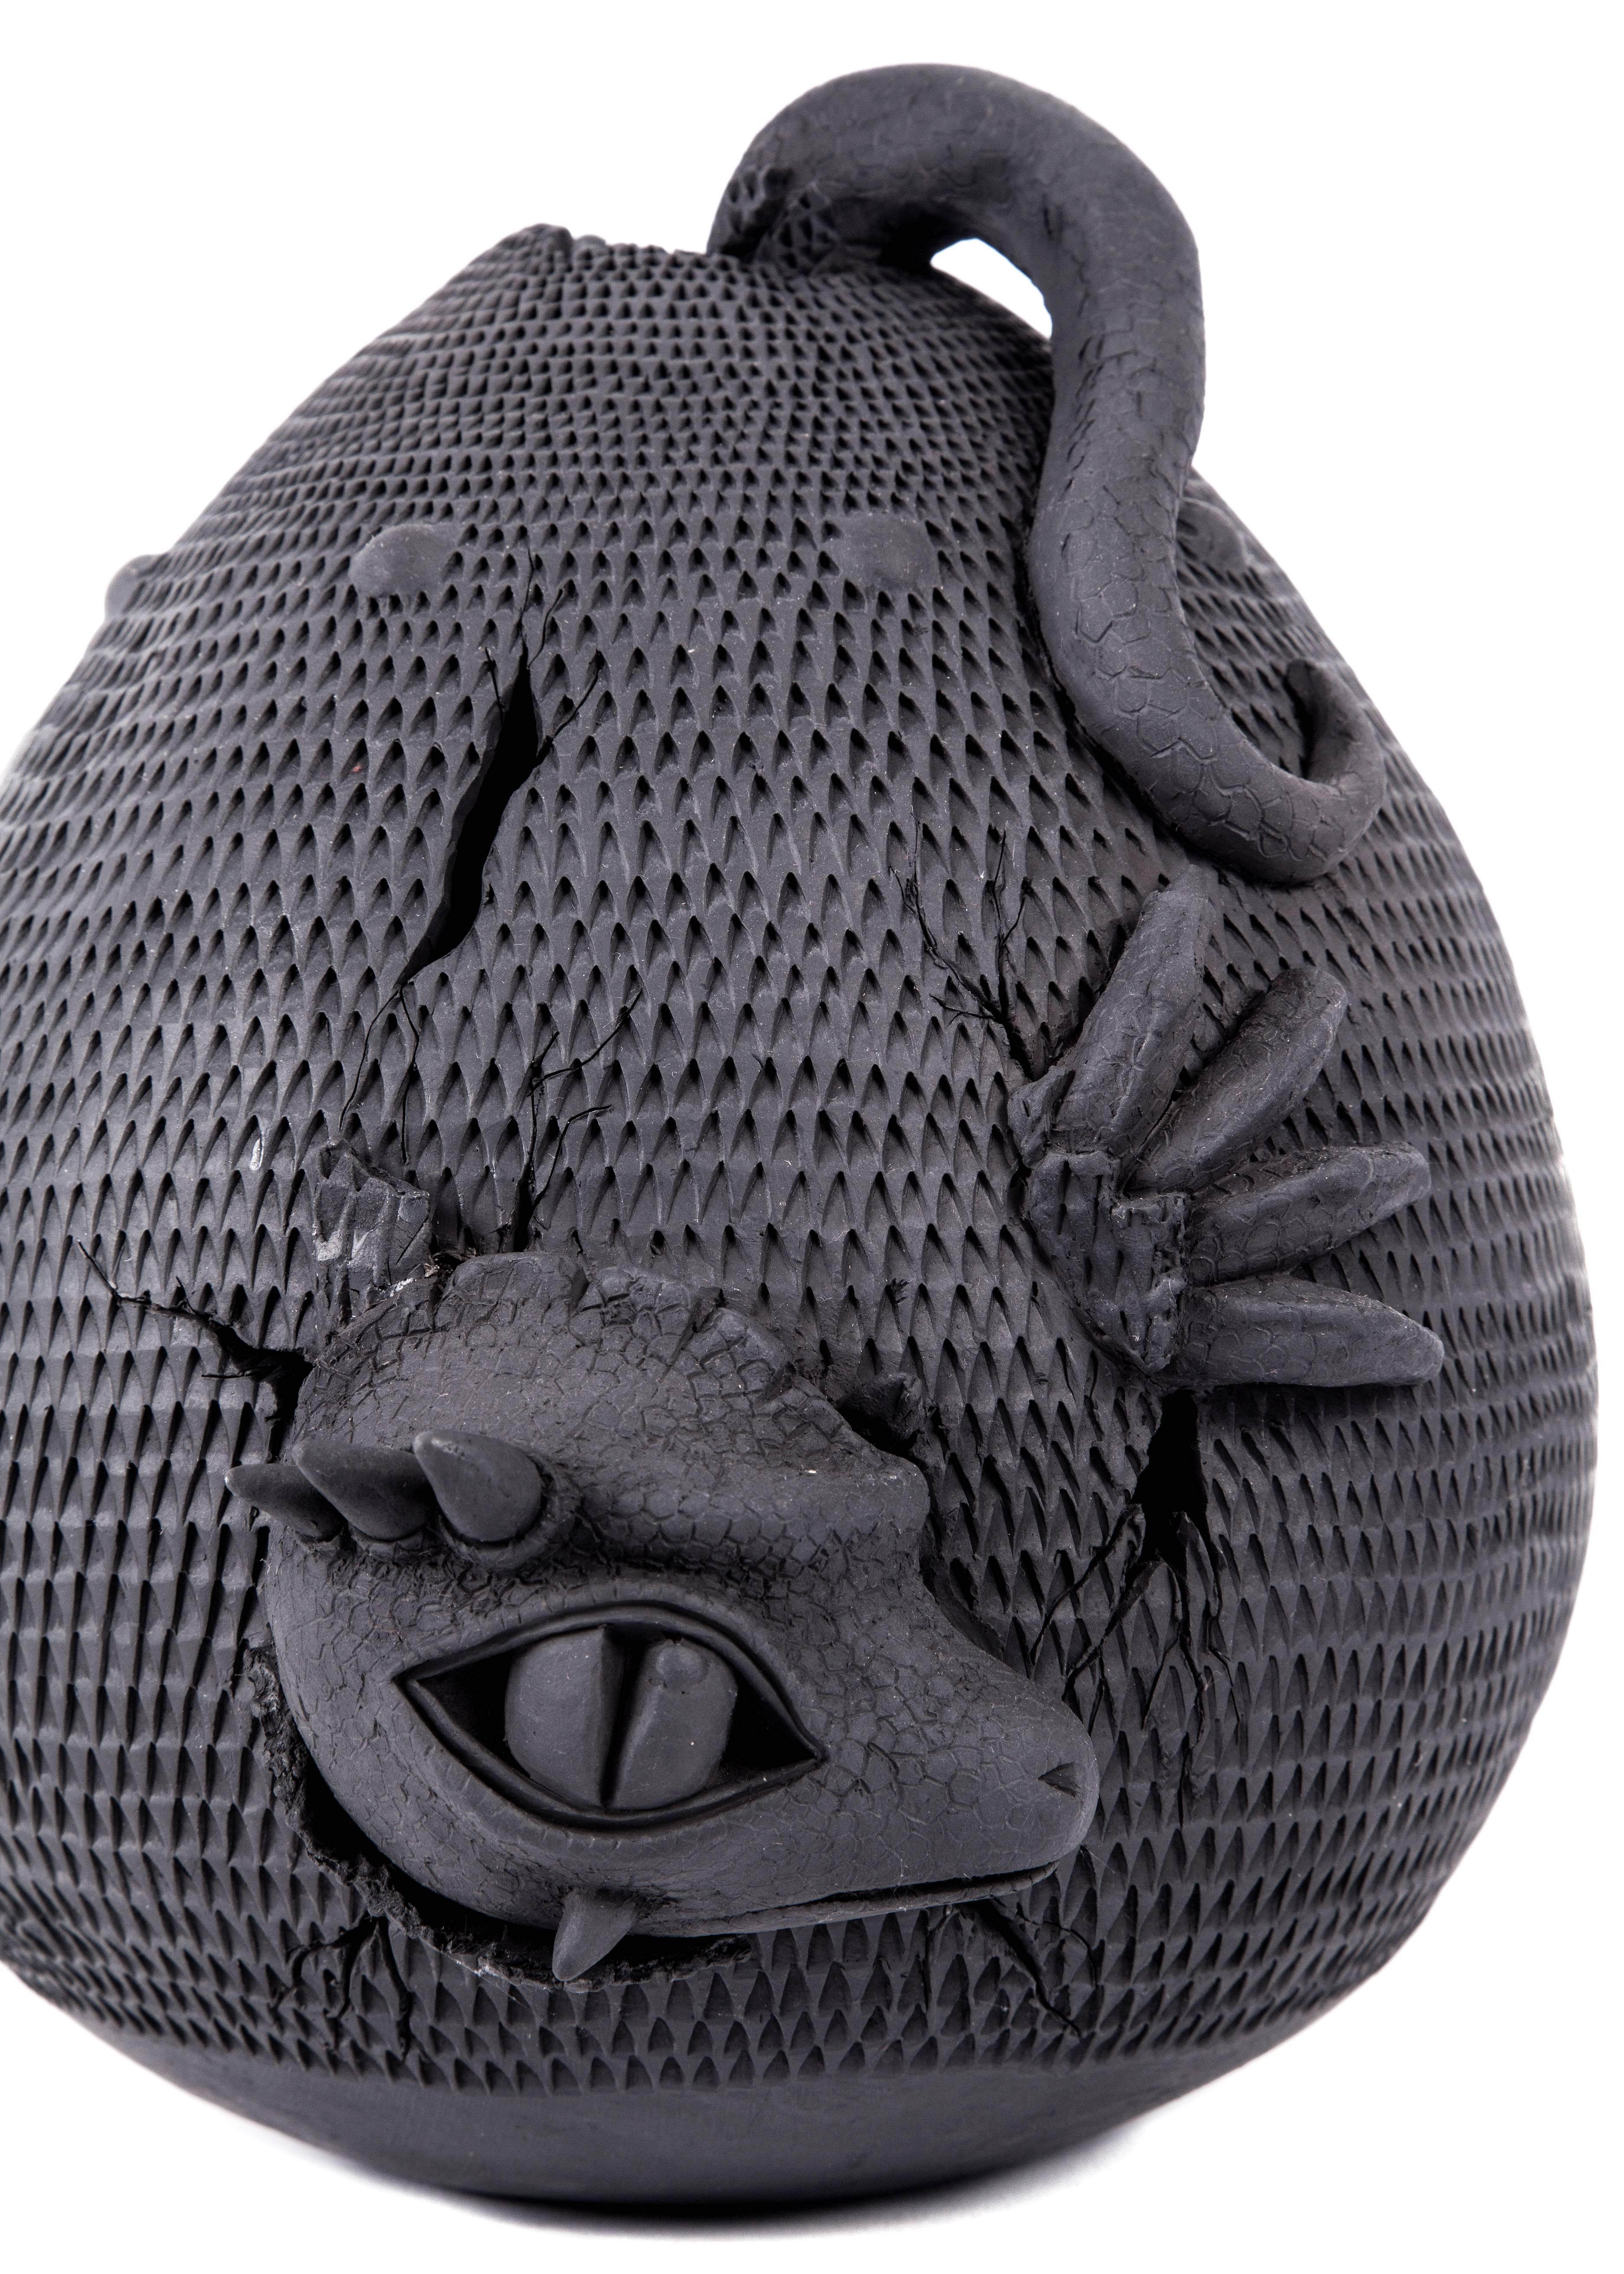 Omar Fabian Canseco Abstract Sculpture - 8'' Dragon / Ceramic Black Clay Mexican Folk Art